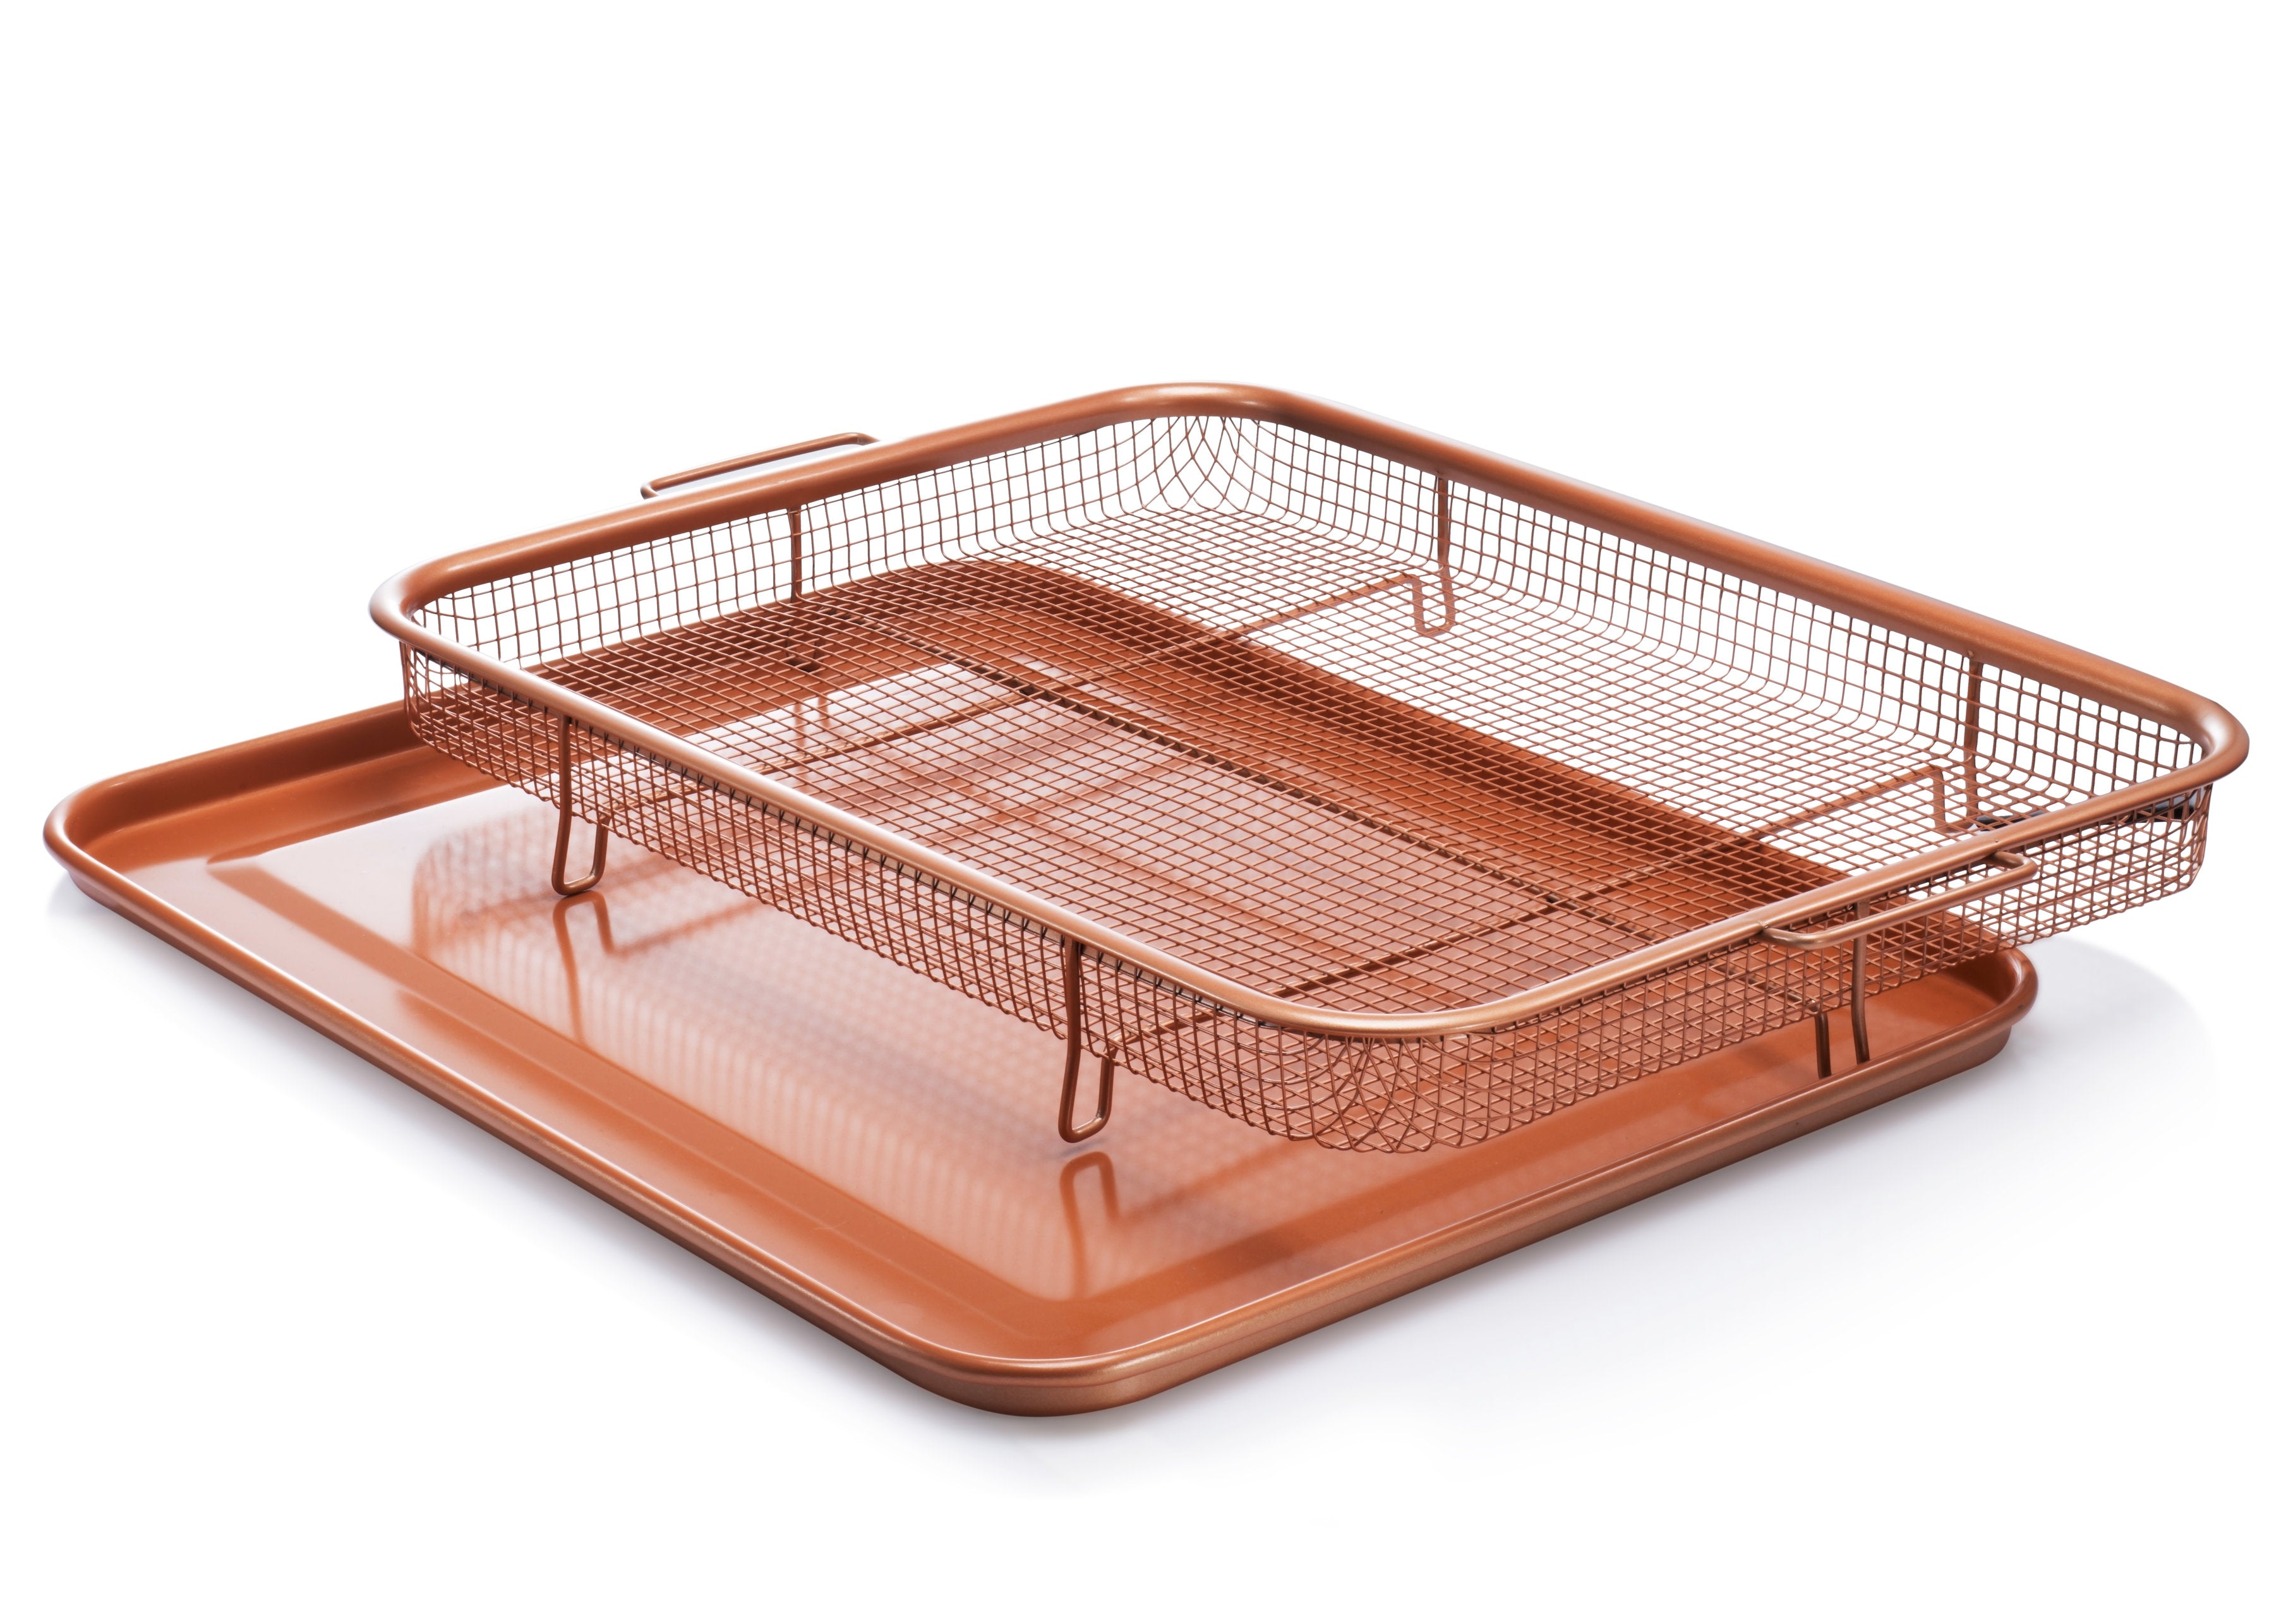 2 Piece Set Air Fryer Basket for Oven Stainless Steel Crisper Tray & Basket